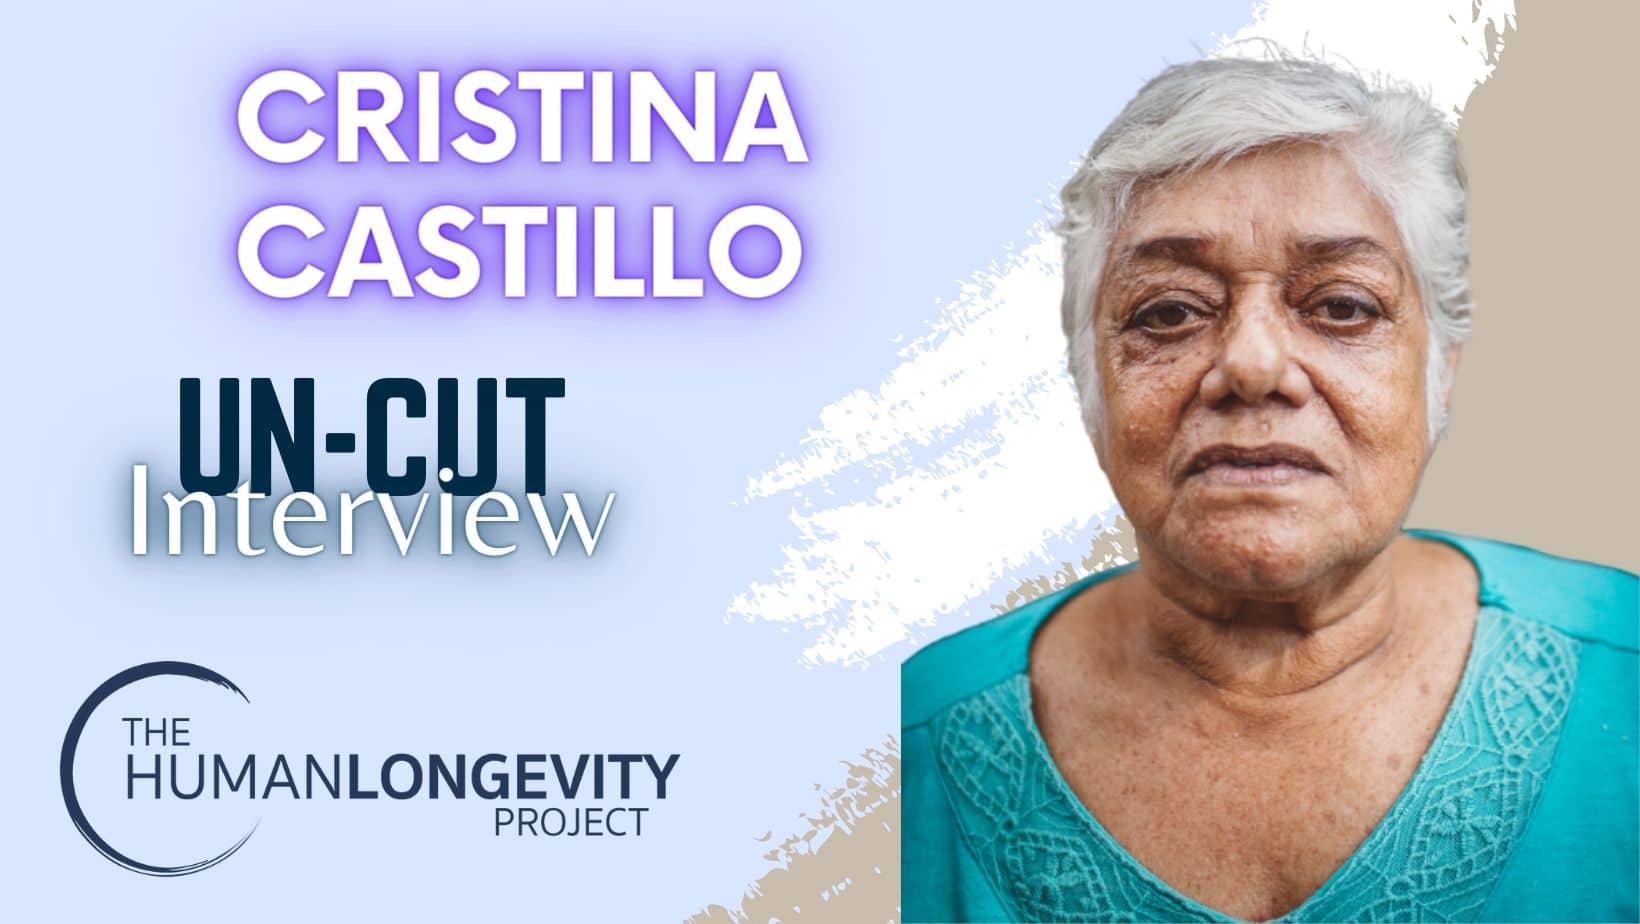 Human Longevity Project Uncut Interview With Cristina Castillo